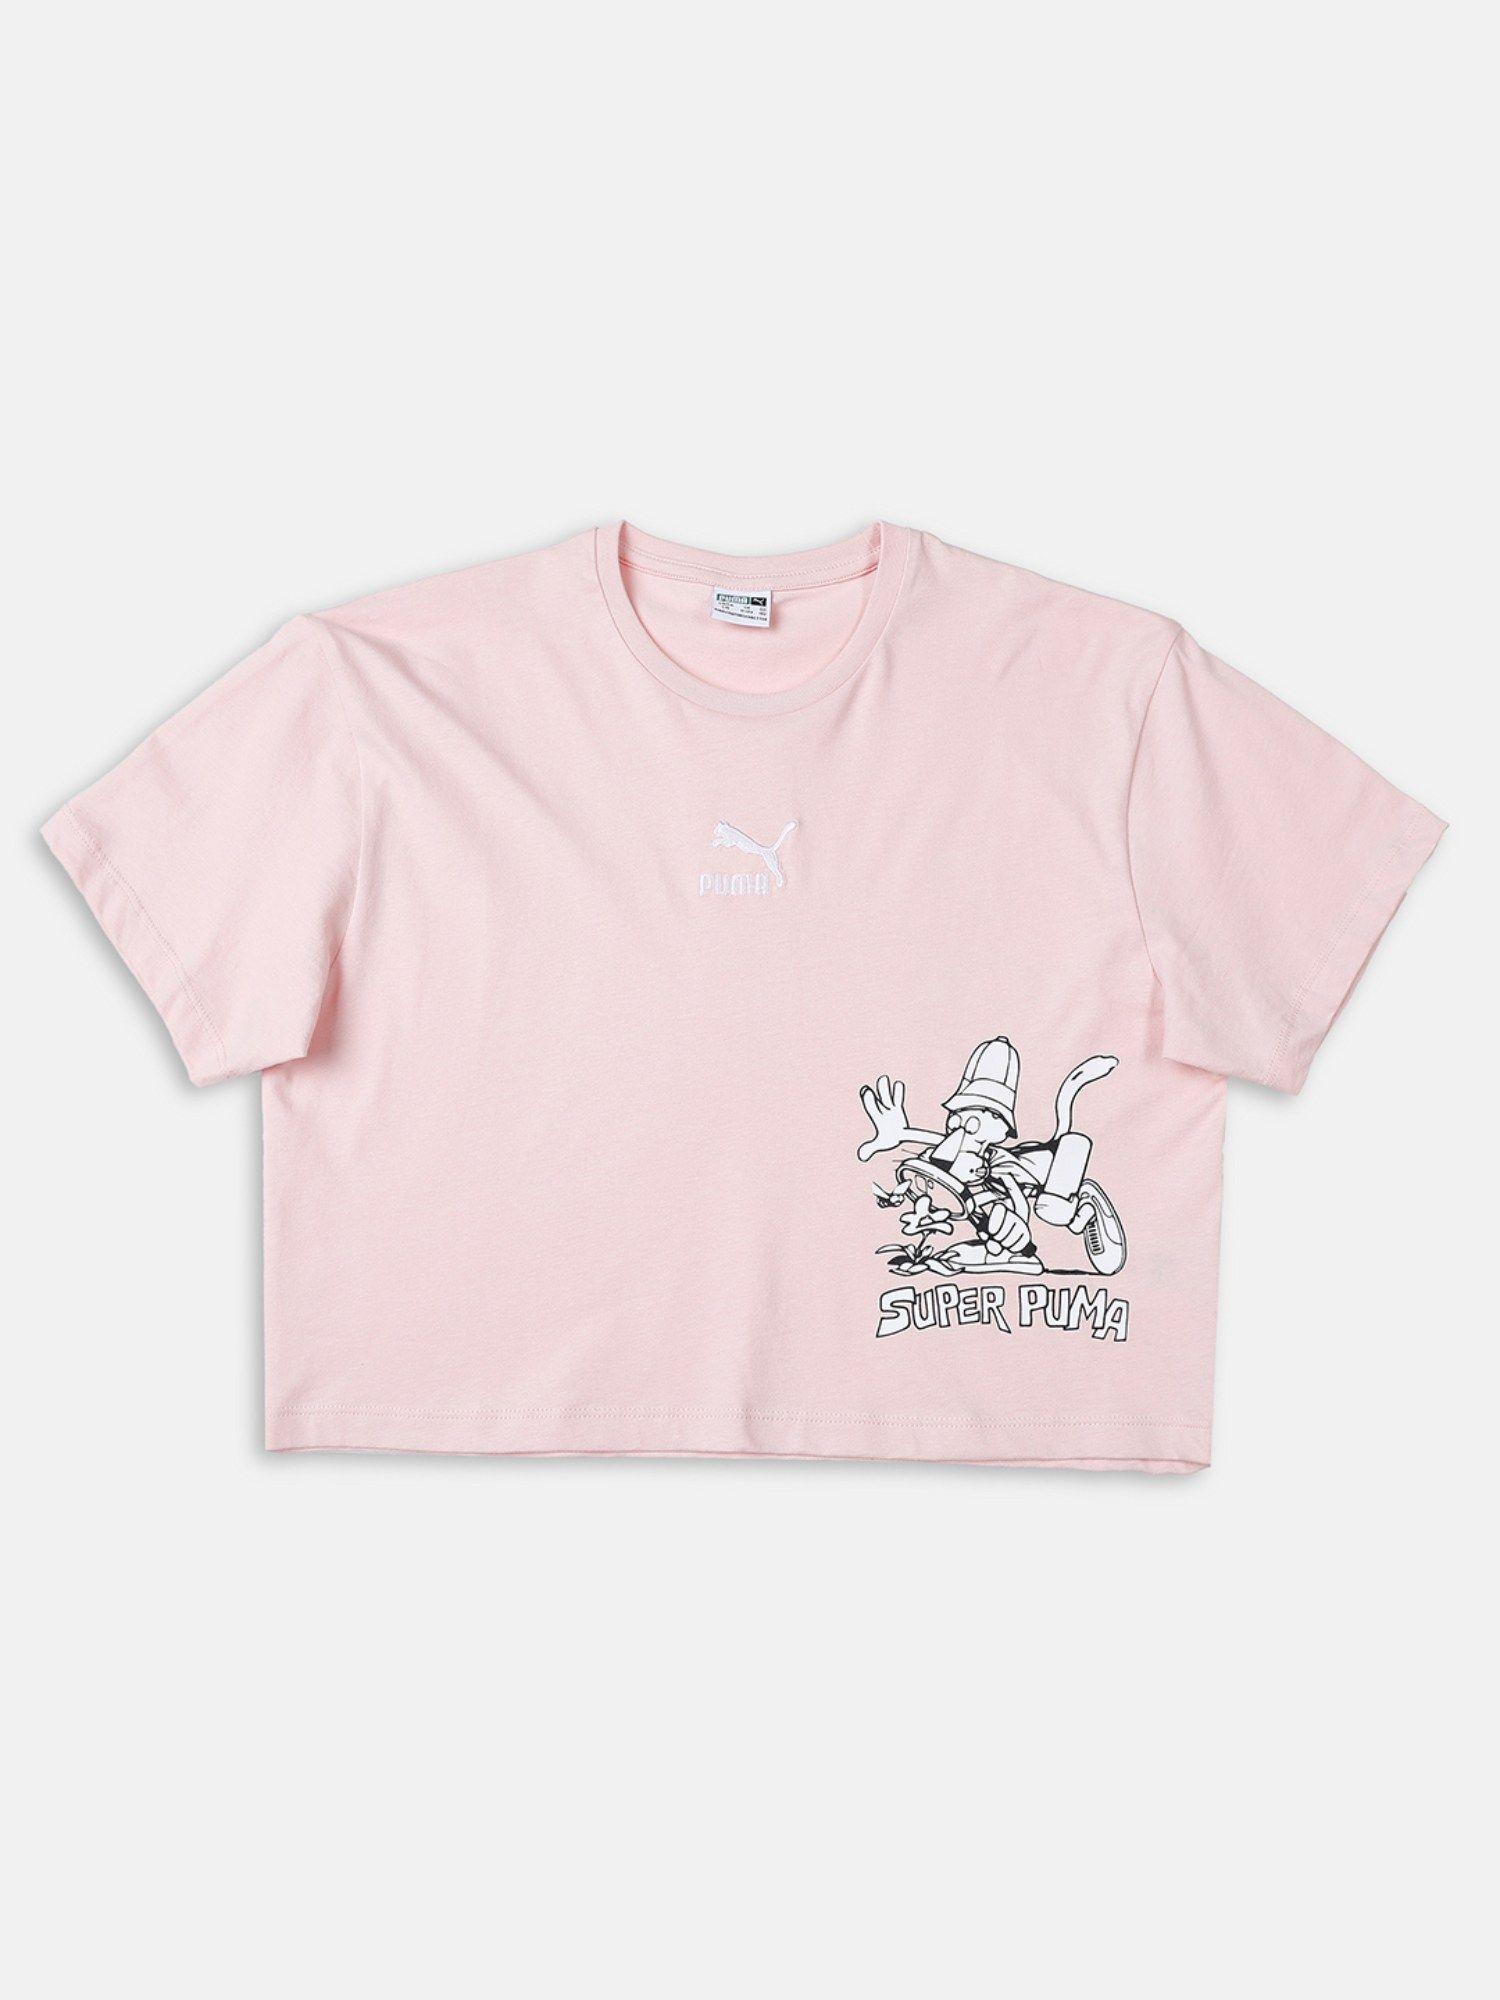 super oversized girls pink t-shirts